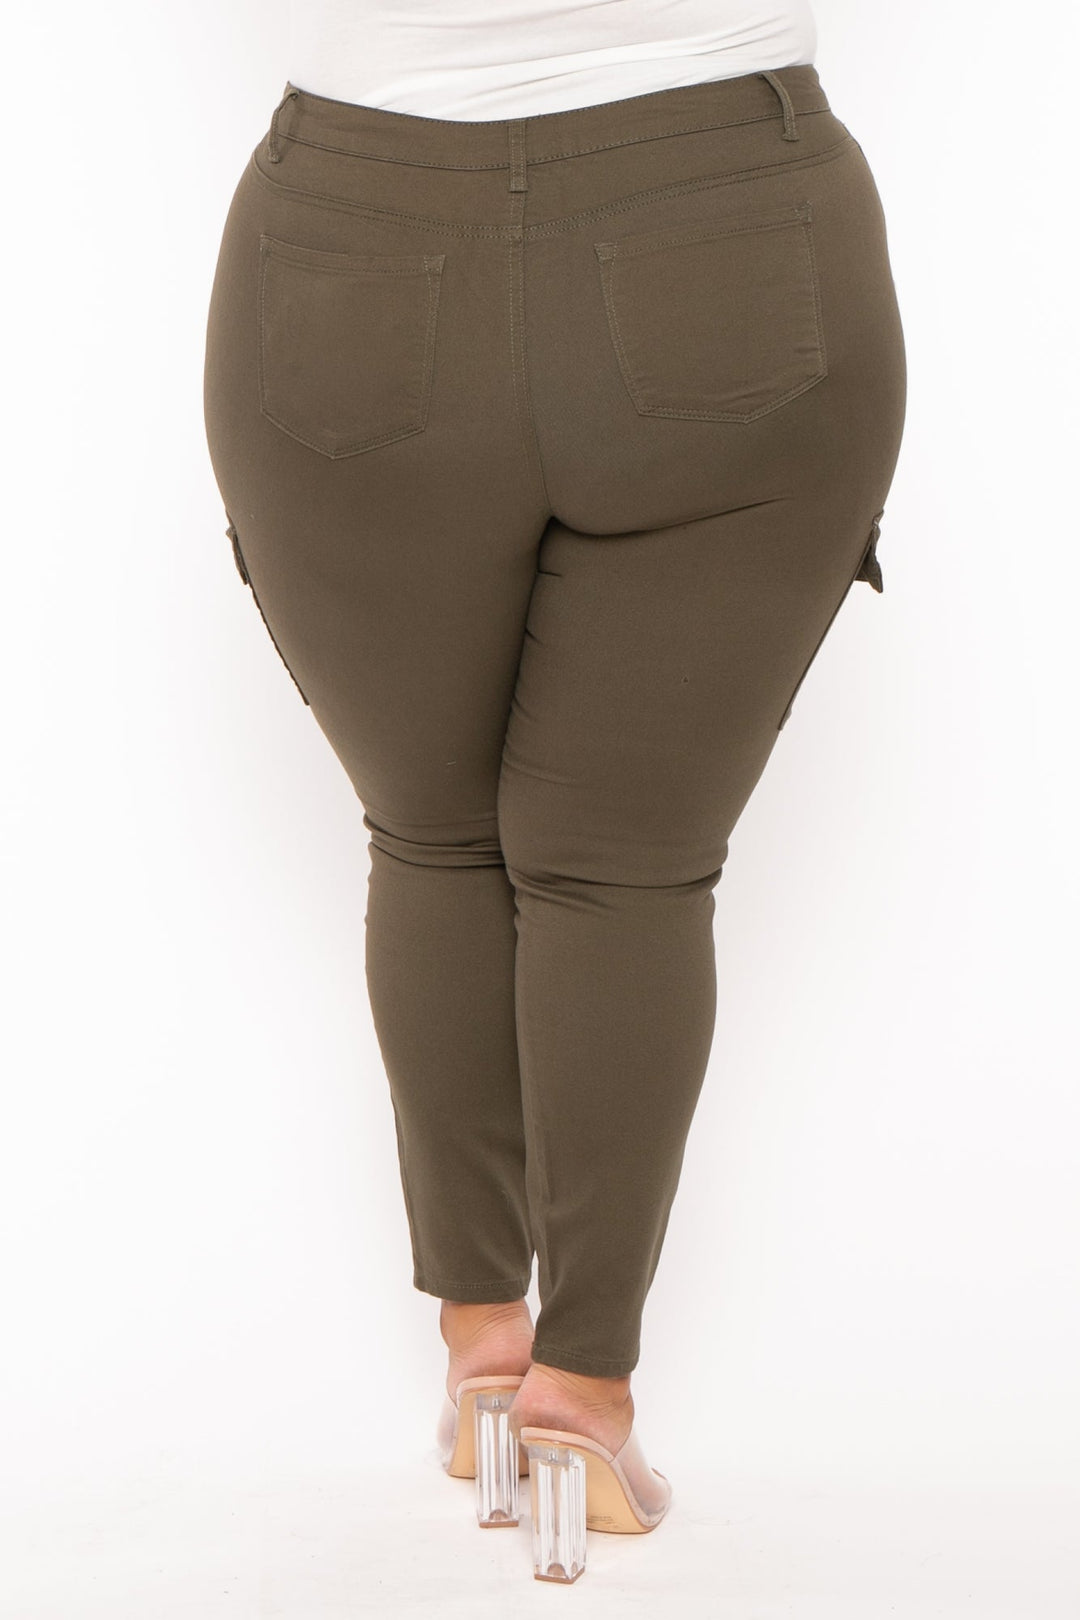 Wax Jean Bottoms Plus Size Cargo Skinny Leg Pants - Olive